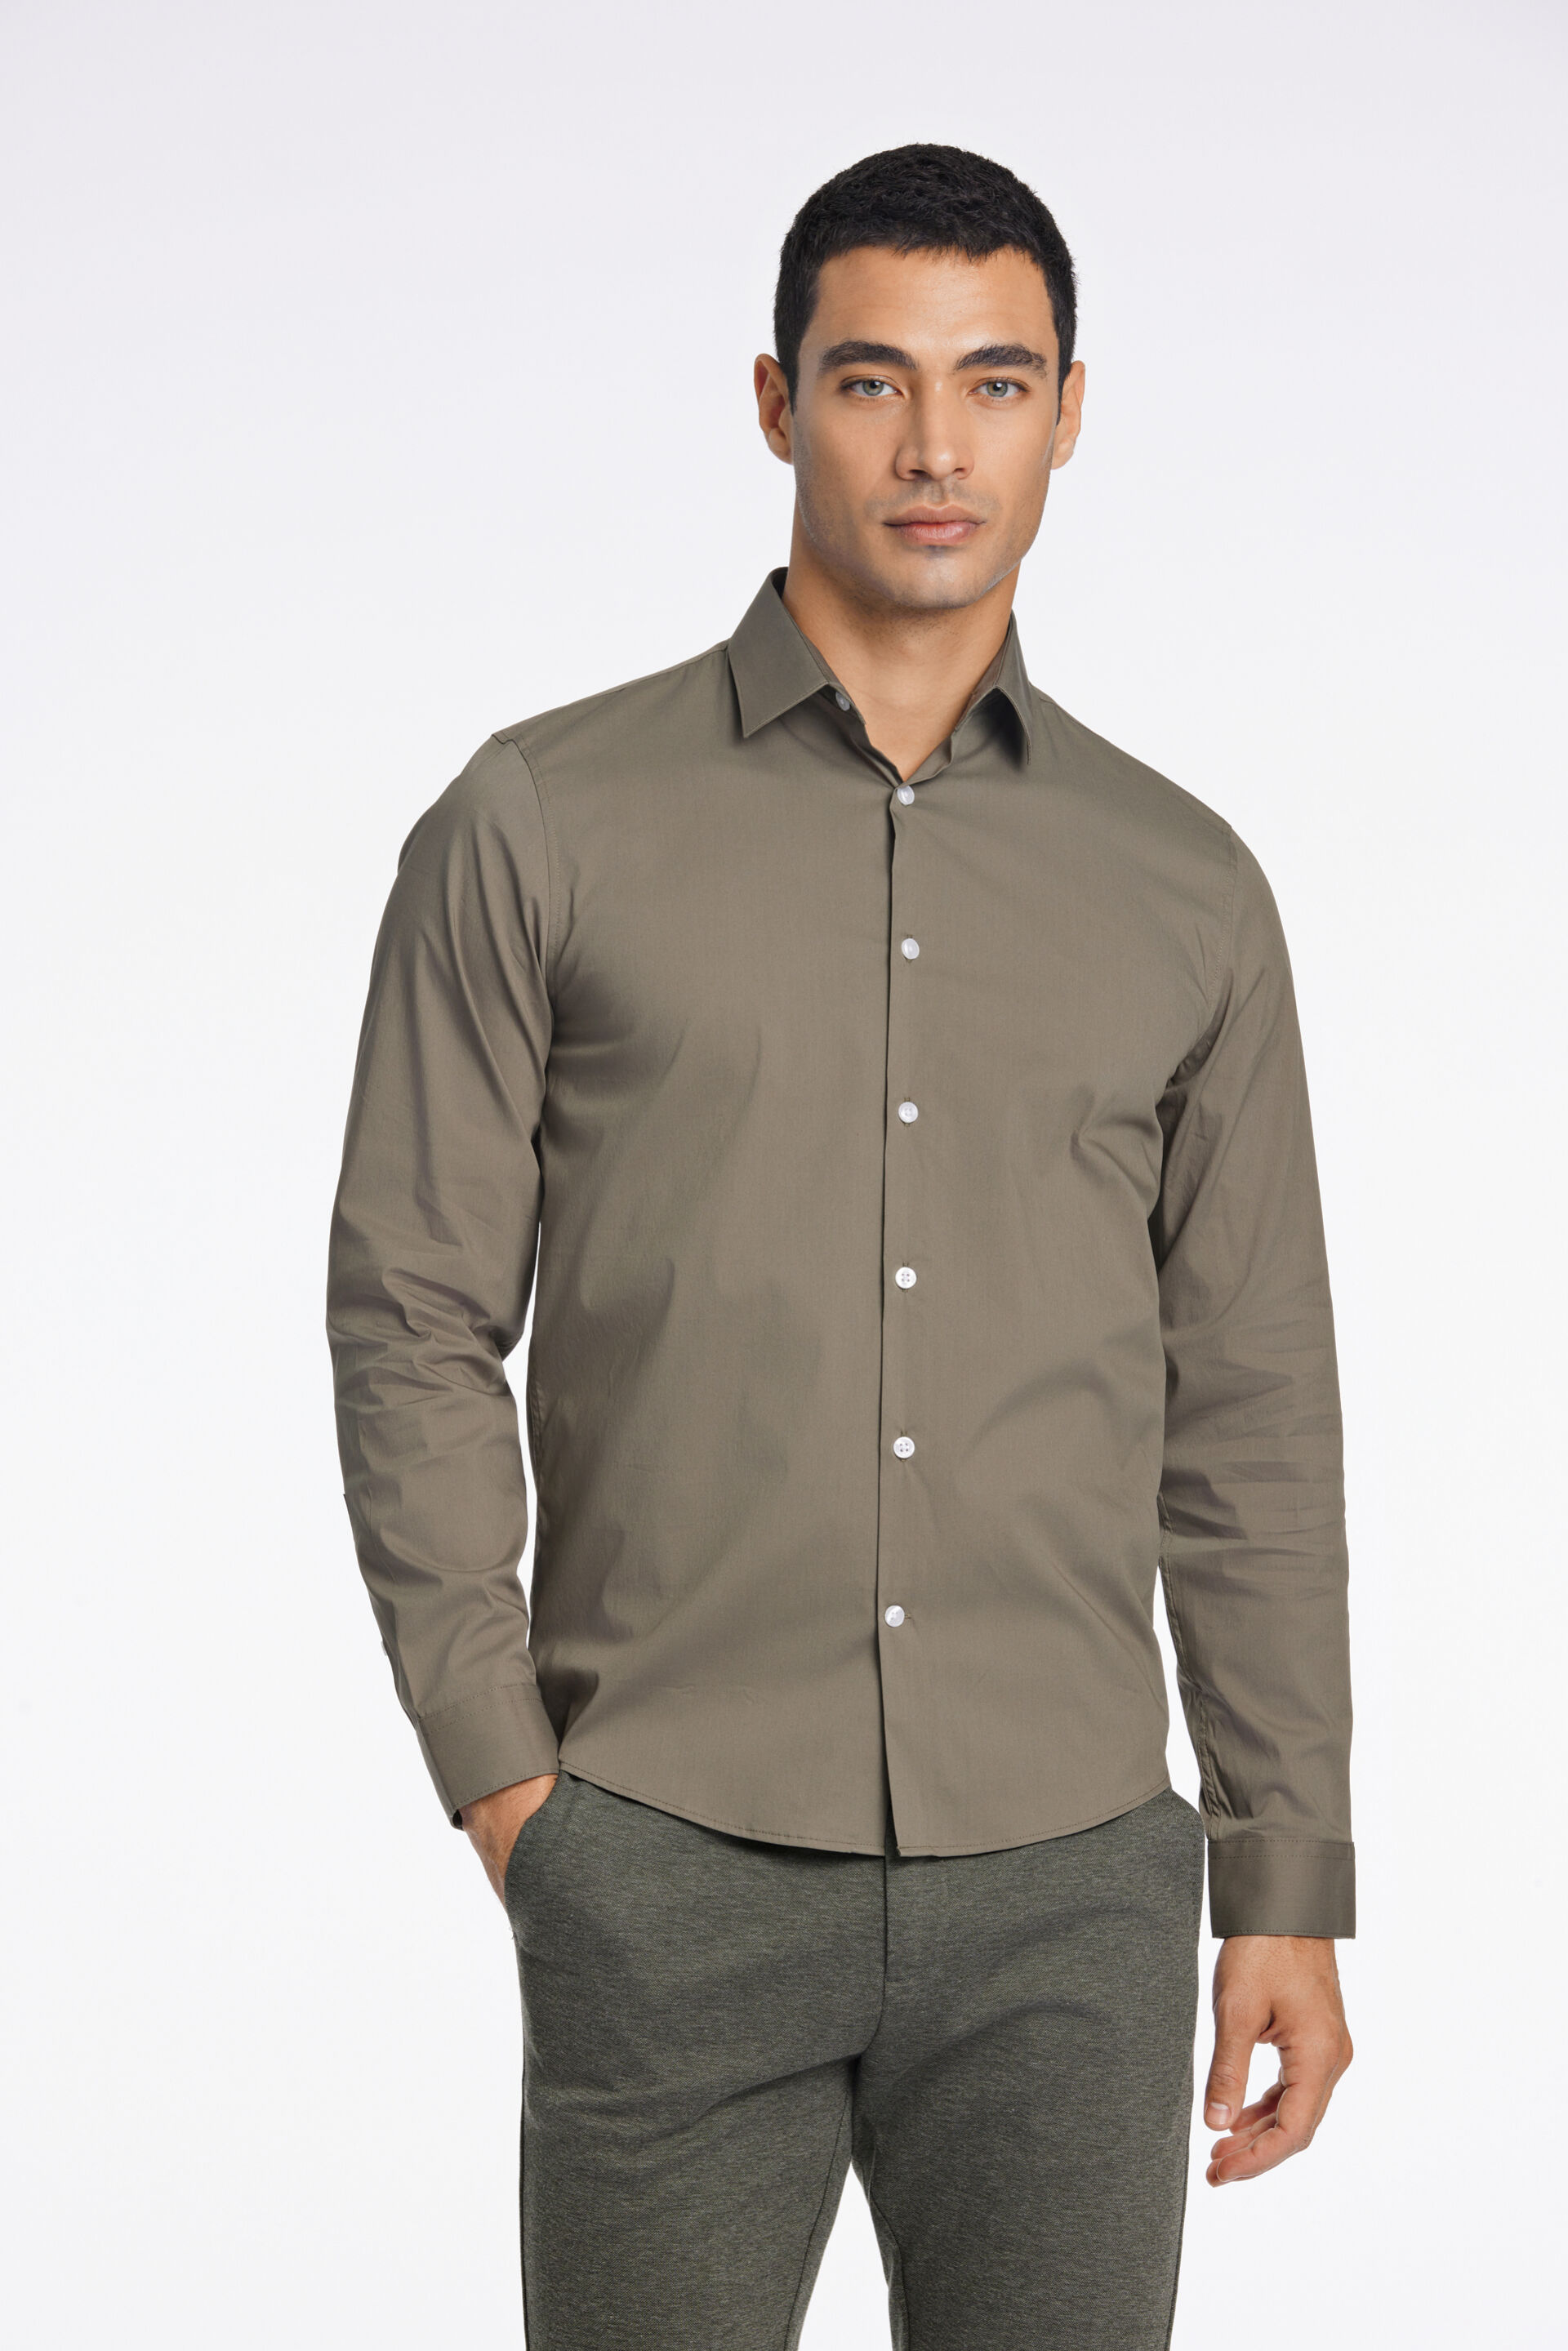 Business casual shirt 30-203172